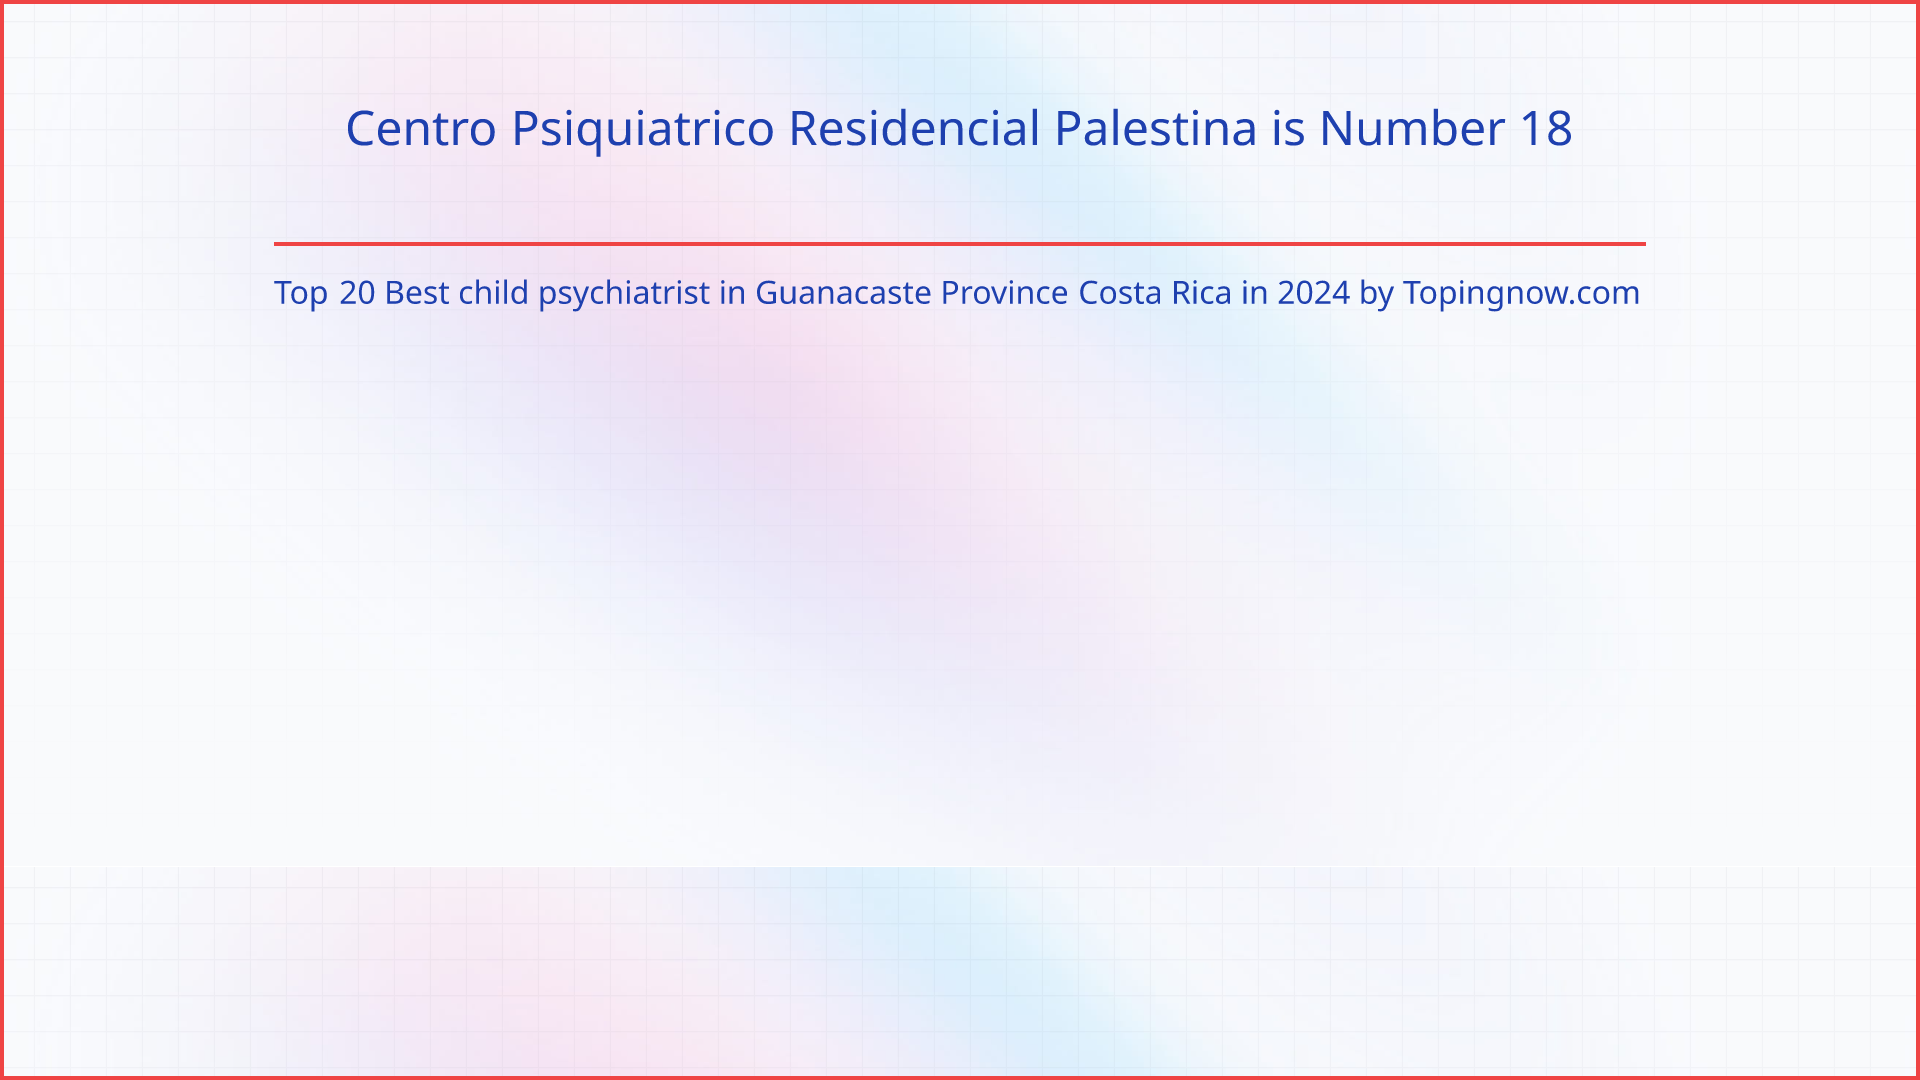 Centro Psiquiatrico Residencial Palestina: Top 20 Best child psychiatrist in Guanacaste Province Costa Rica in 2024